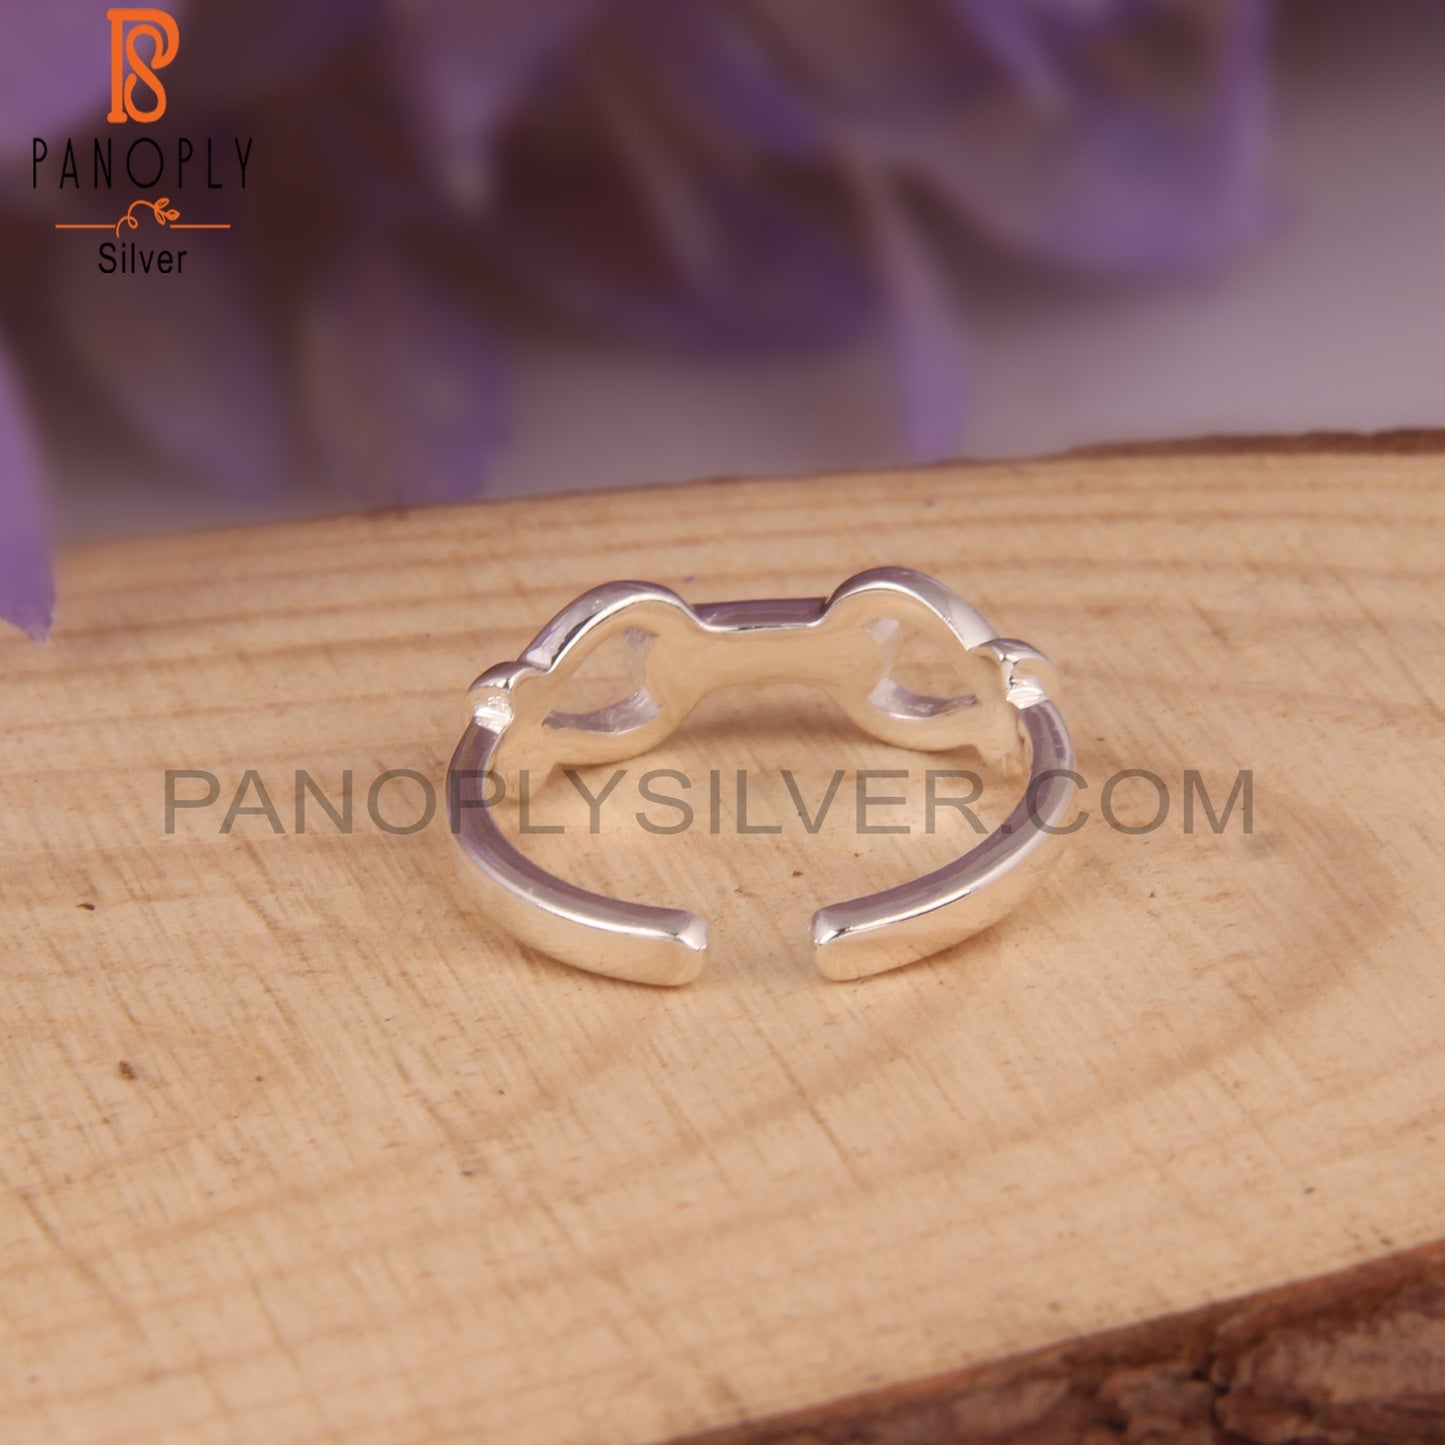 Handmade 925 Sterling Silver Knot Pattern Ring